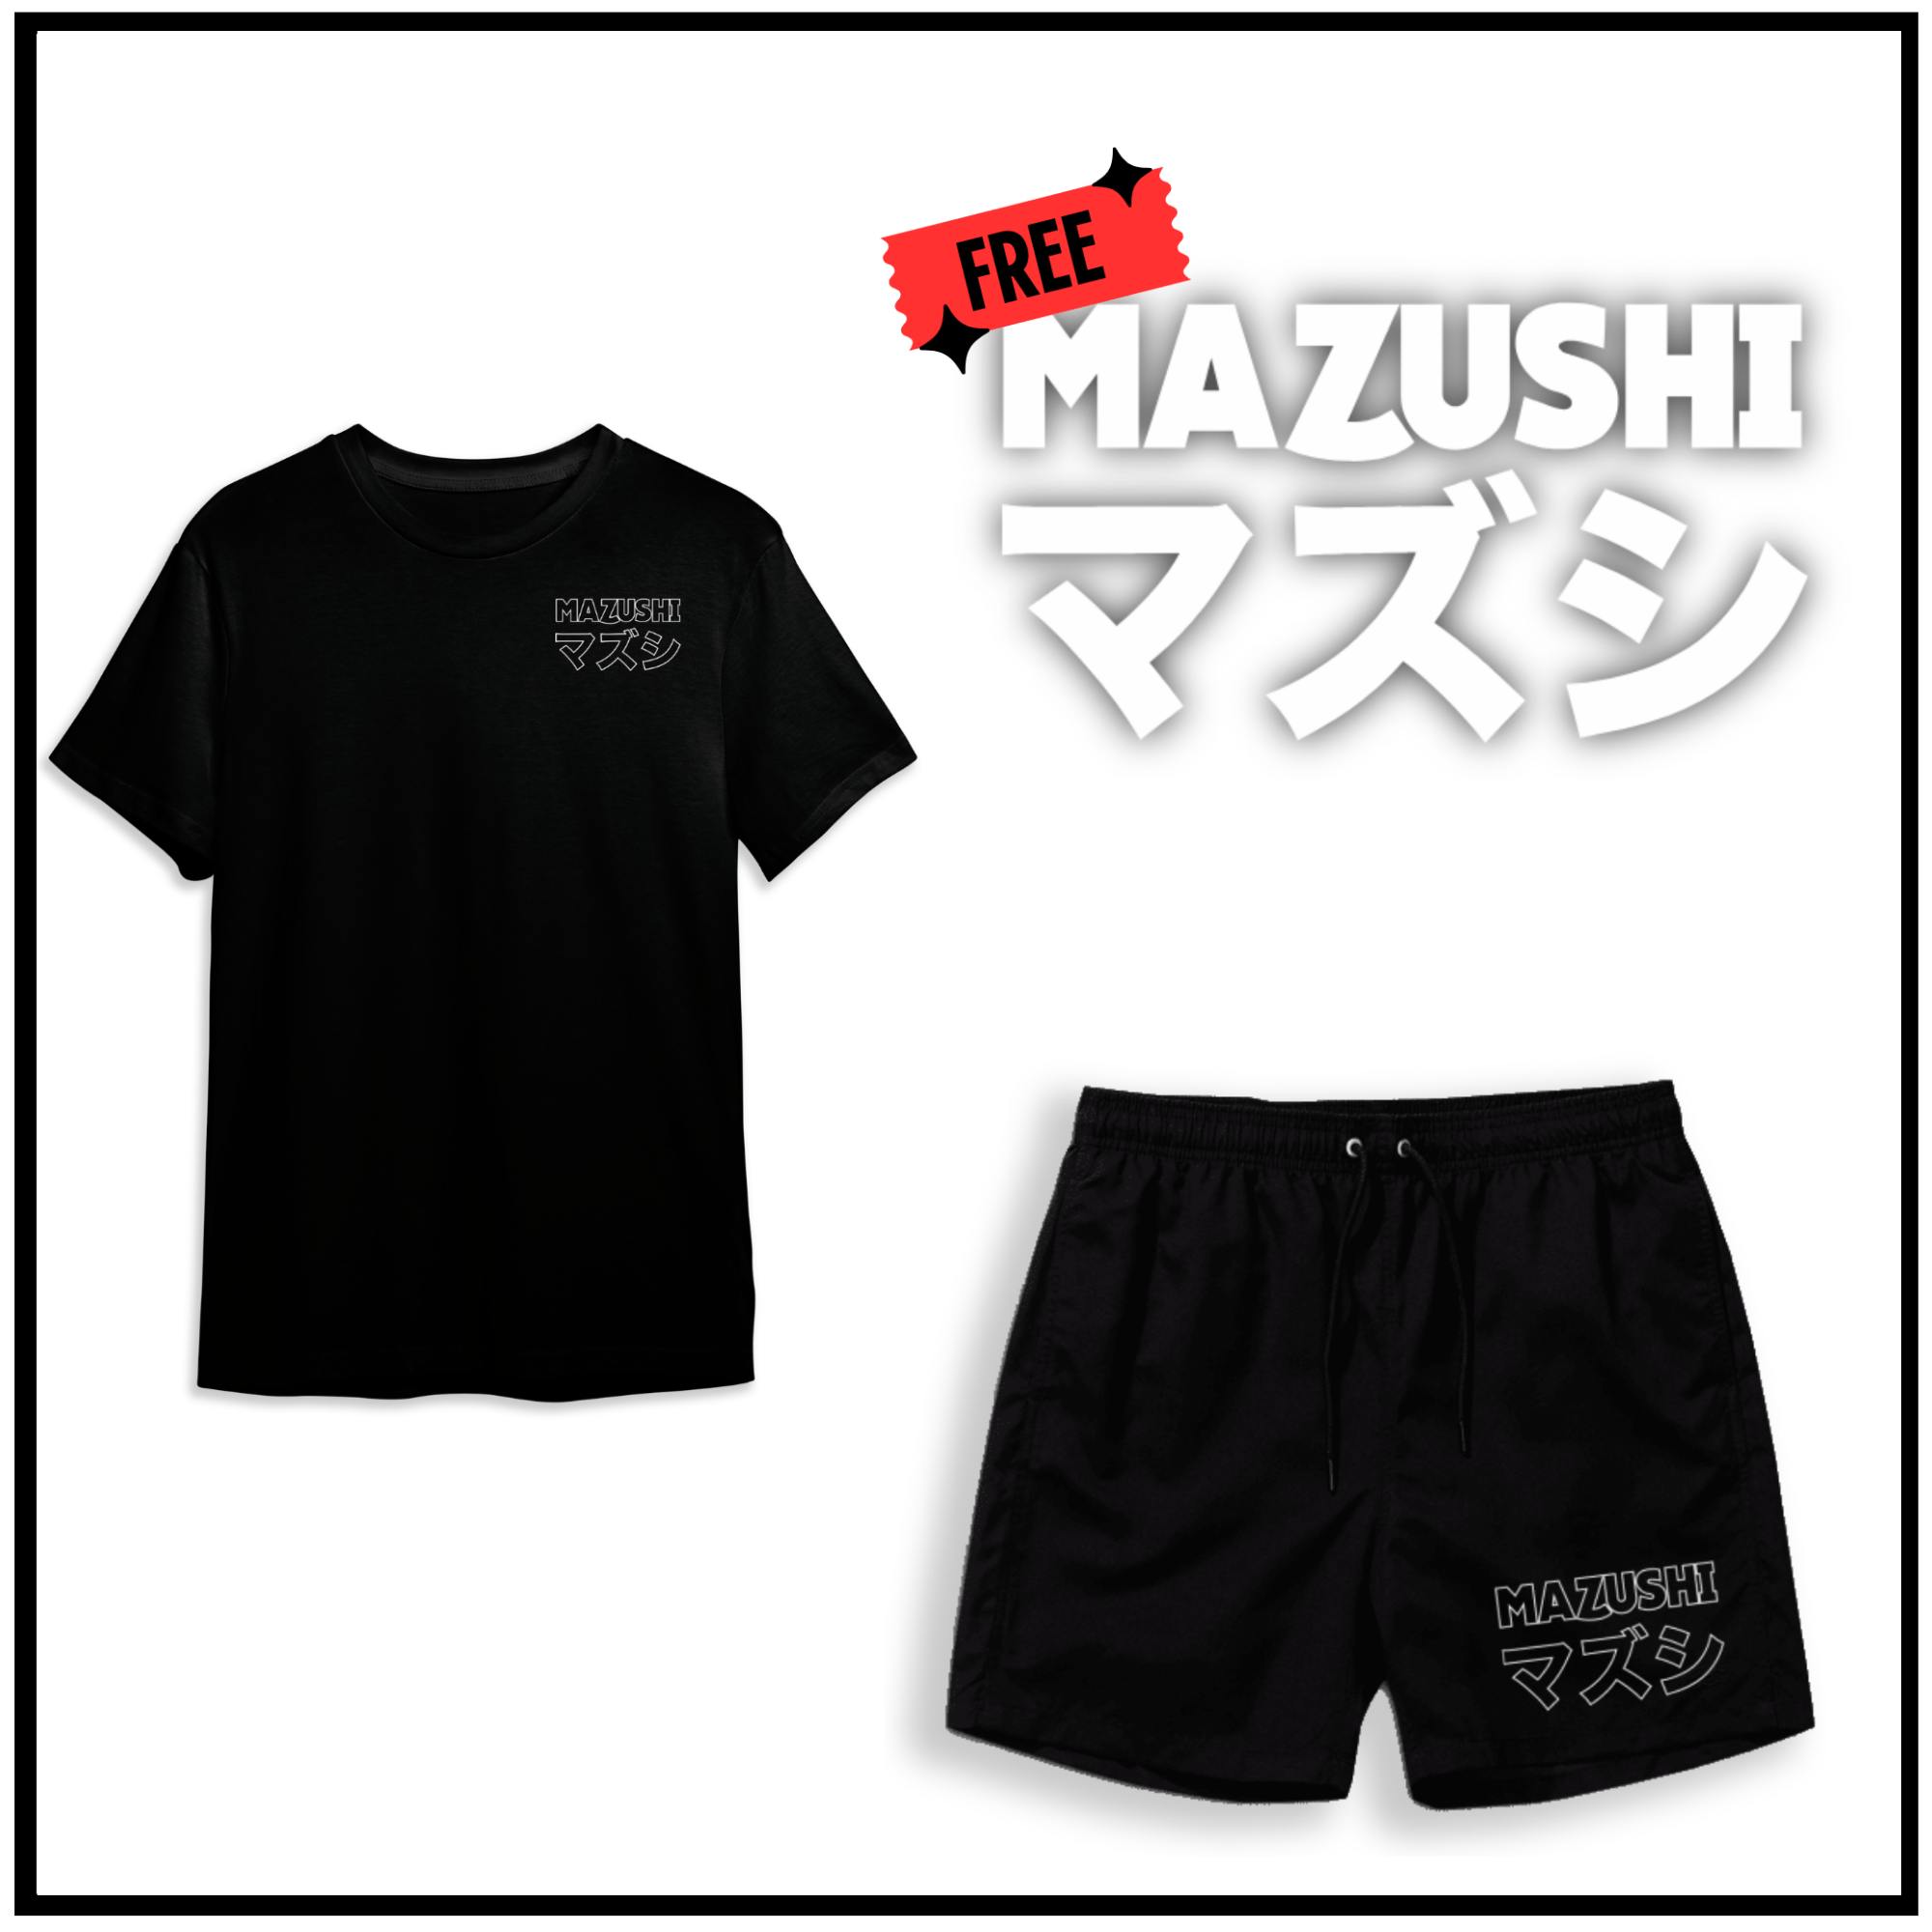 Mazushi Classic Pack - Mazushi